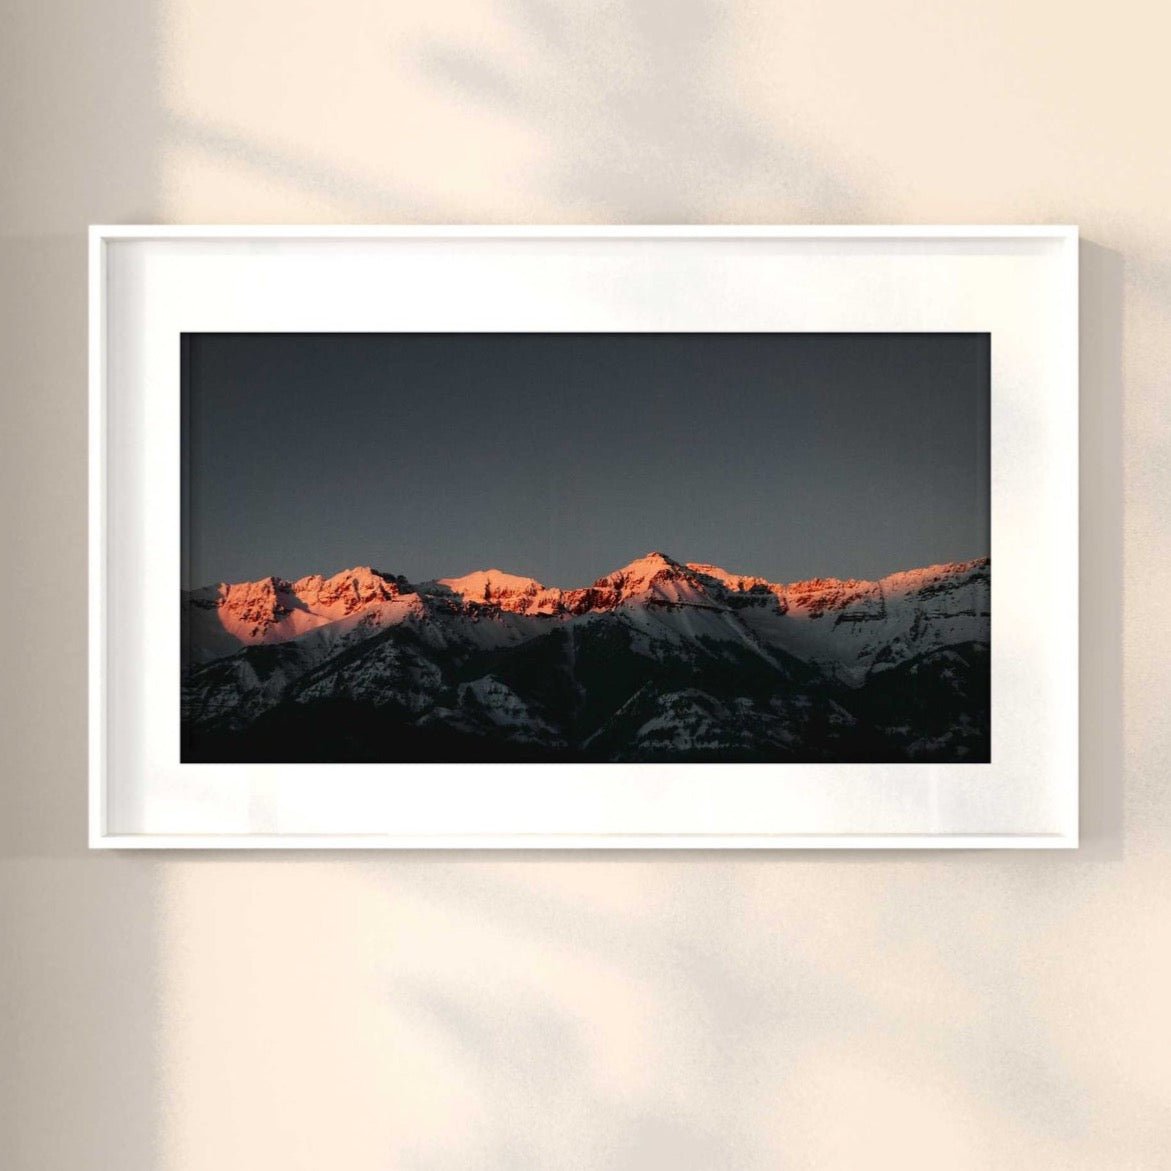 CAROL M. HIGHSMITH - Blick auf den Sonnenuntergang in den Bergen